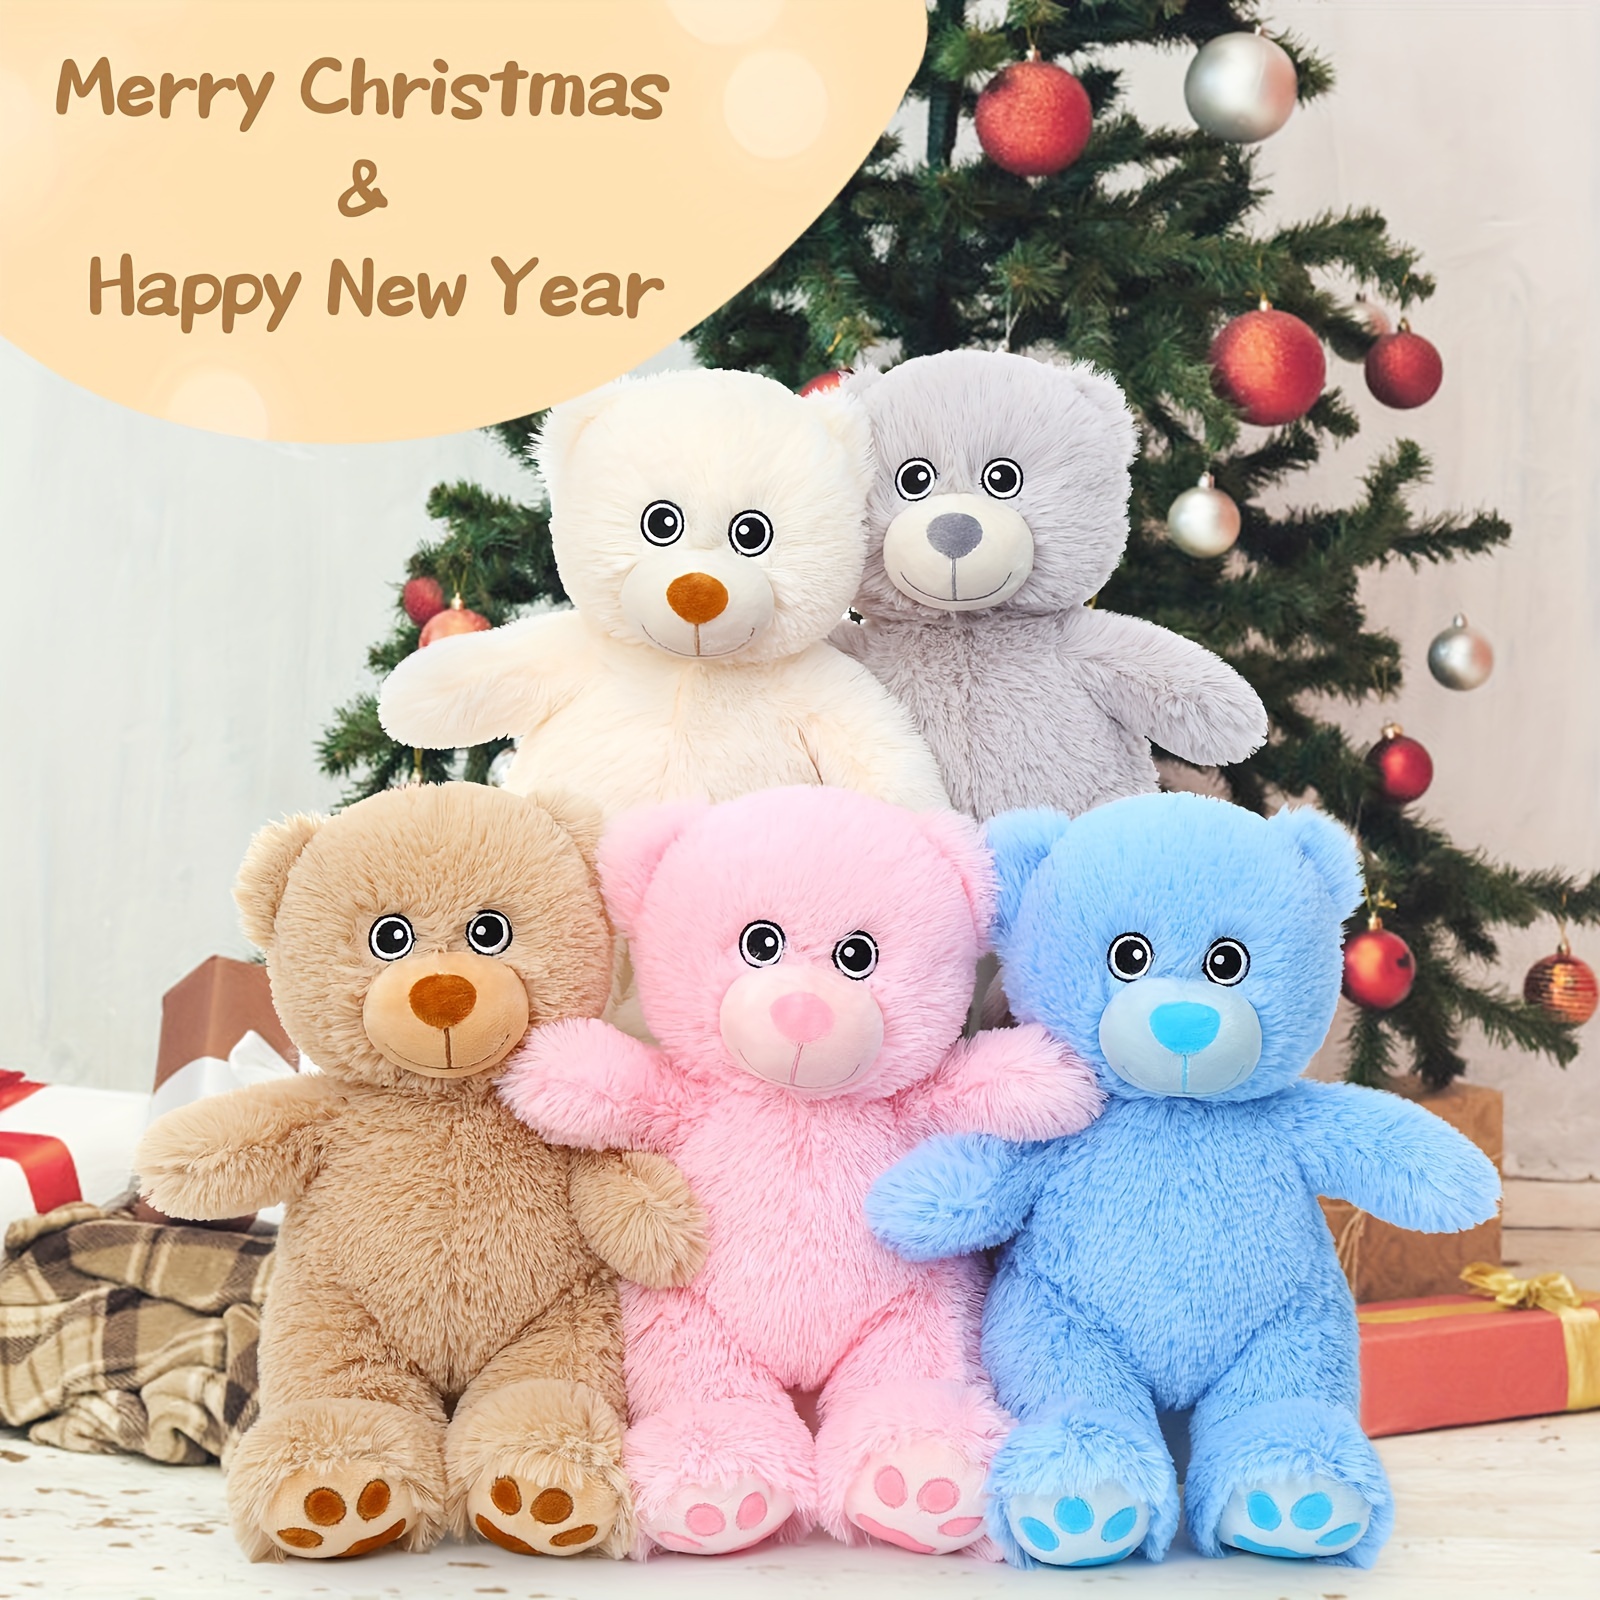 

Teddy Bears 5 Packs For Baby Shower - Small Teddy Bear Stuffed Animal Bulk 13", White, Blue, Pink, Light Brown, Grey - Stuffed Bear Plush Toy For Wedding Birthday Christmas Party Decorations